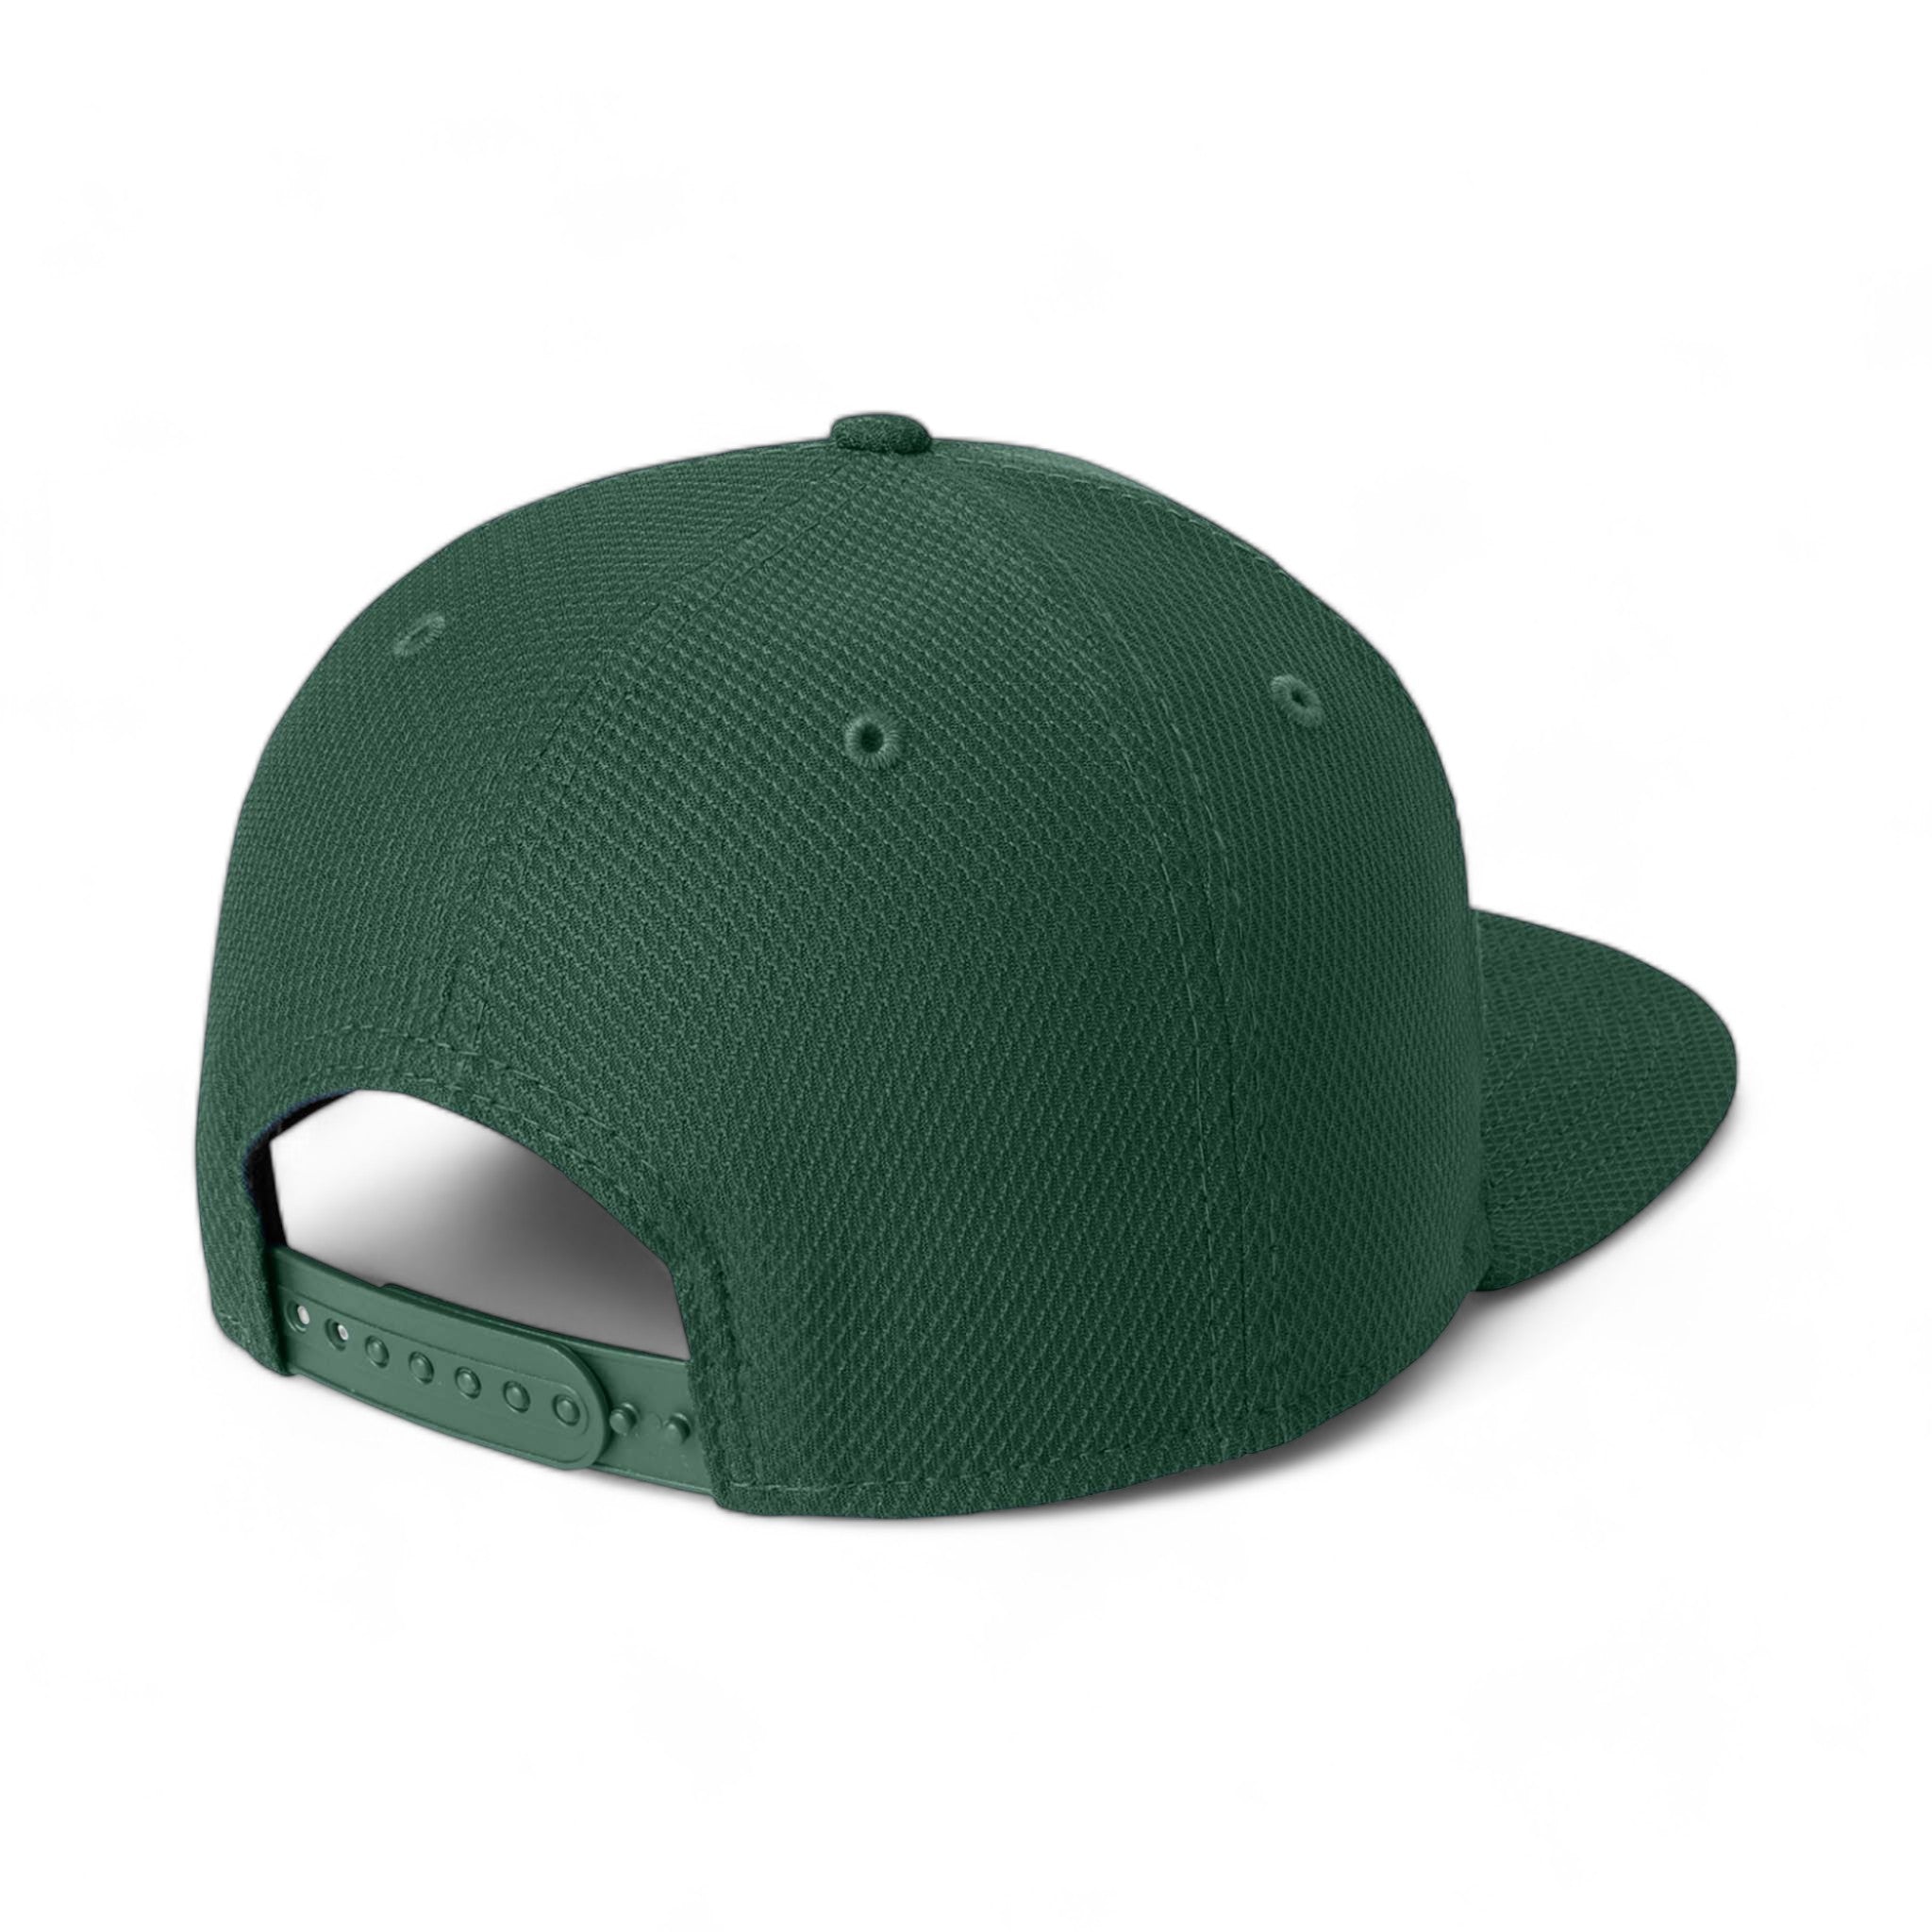 Back view of New Era NE404 custom hat in dark green